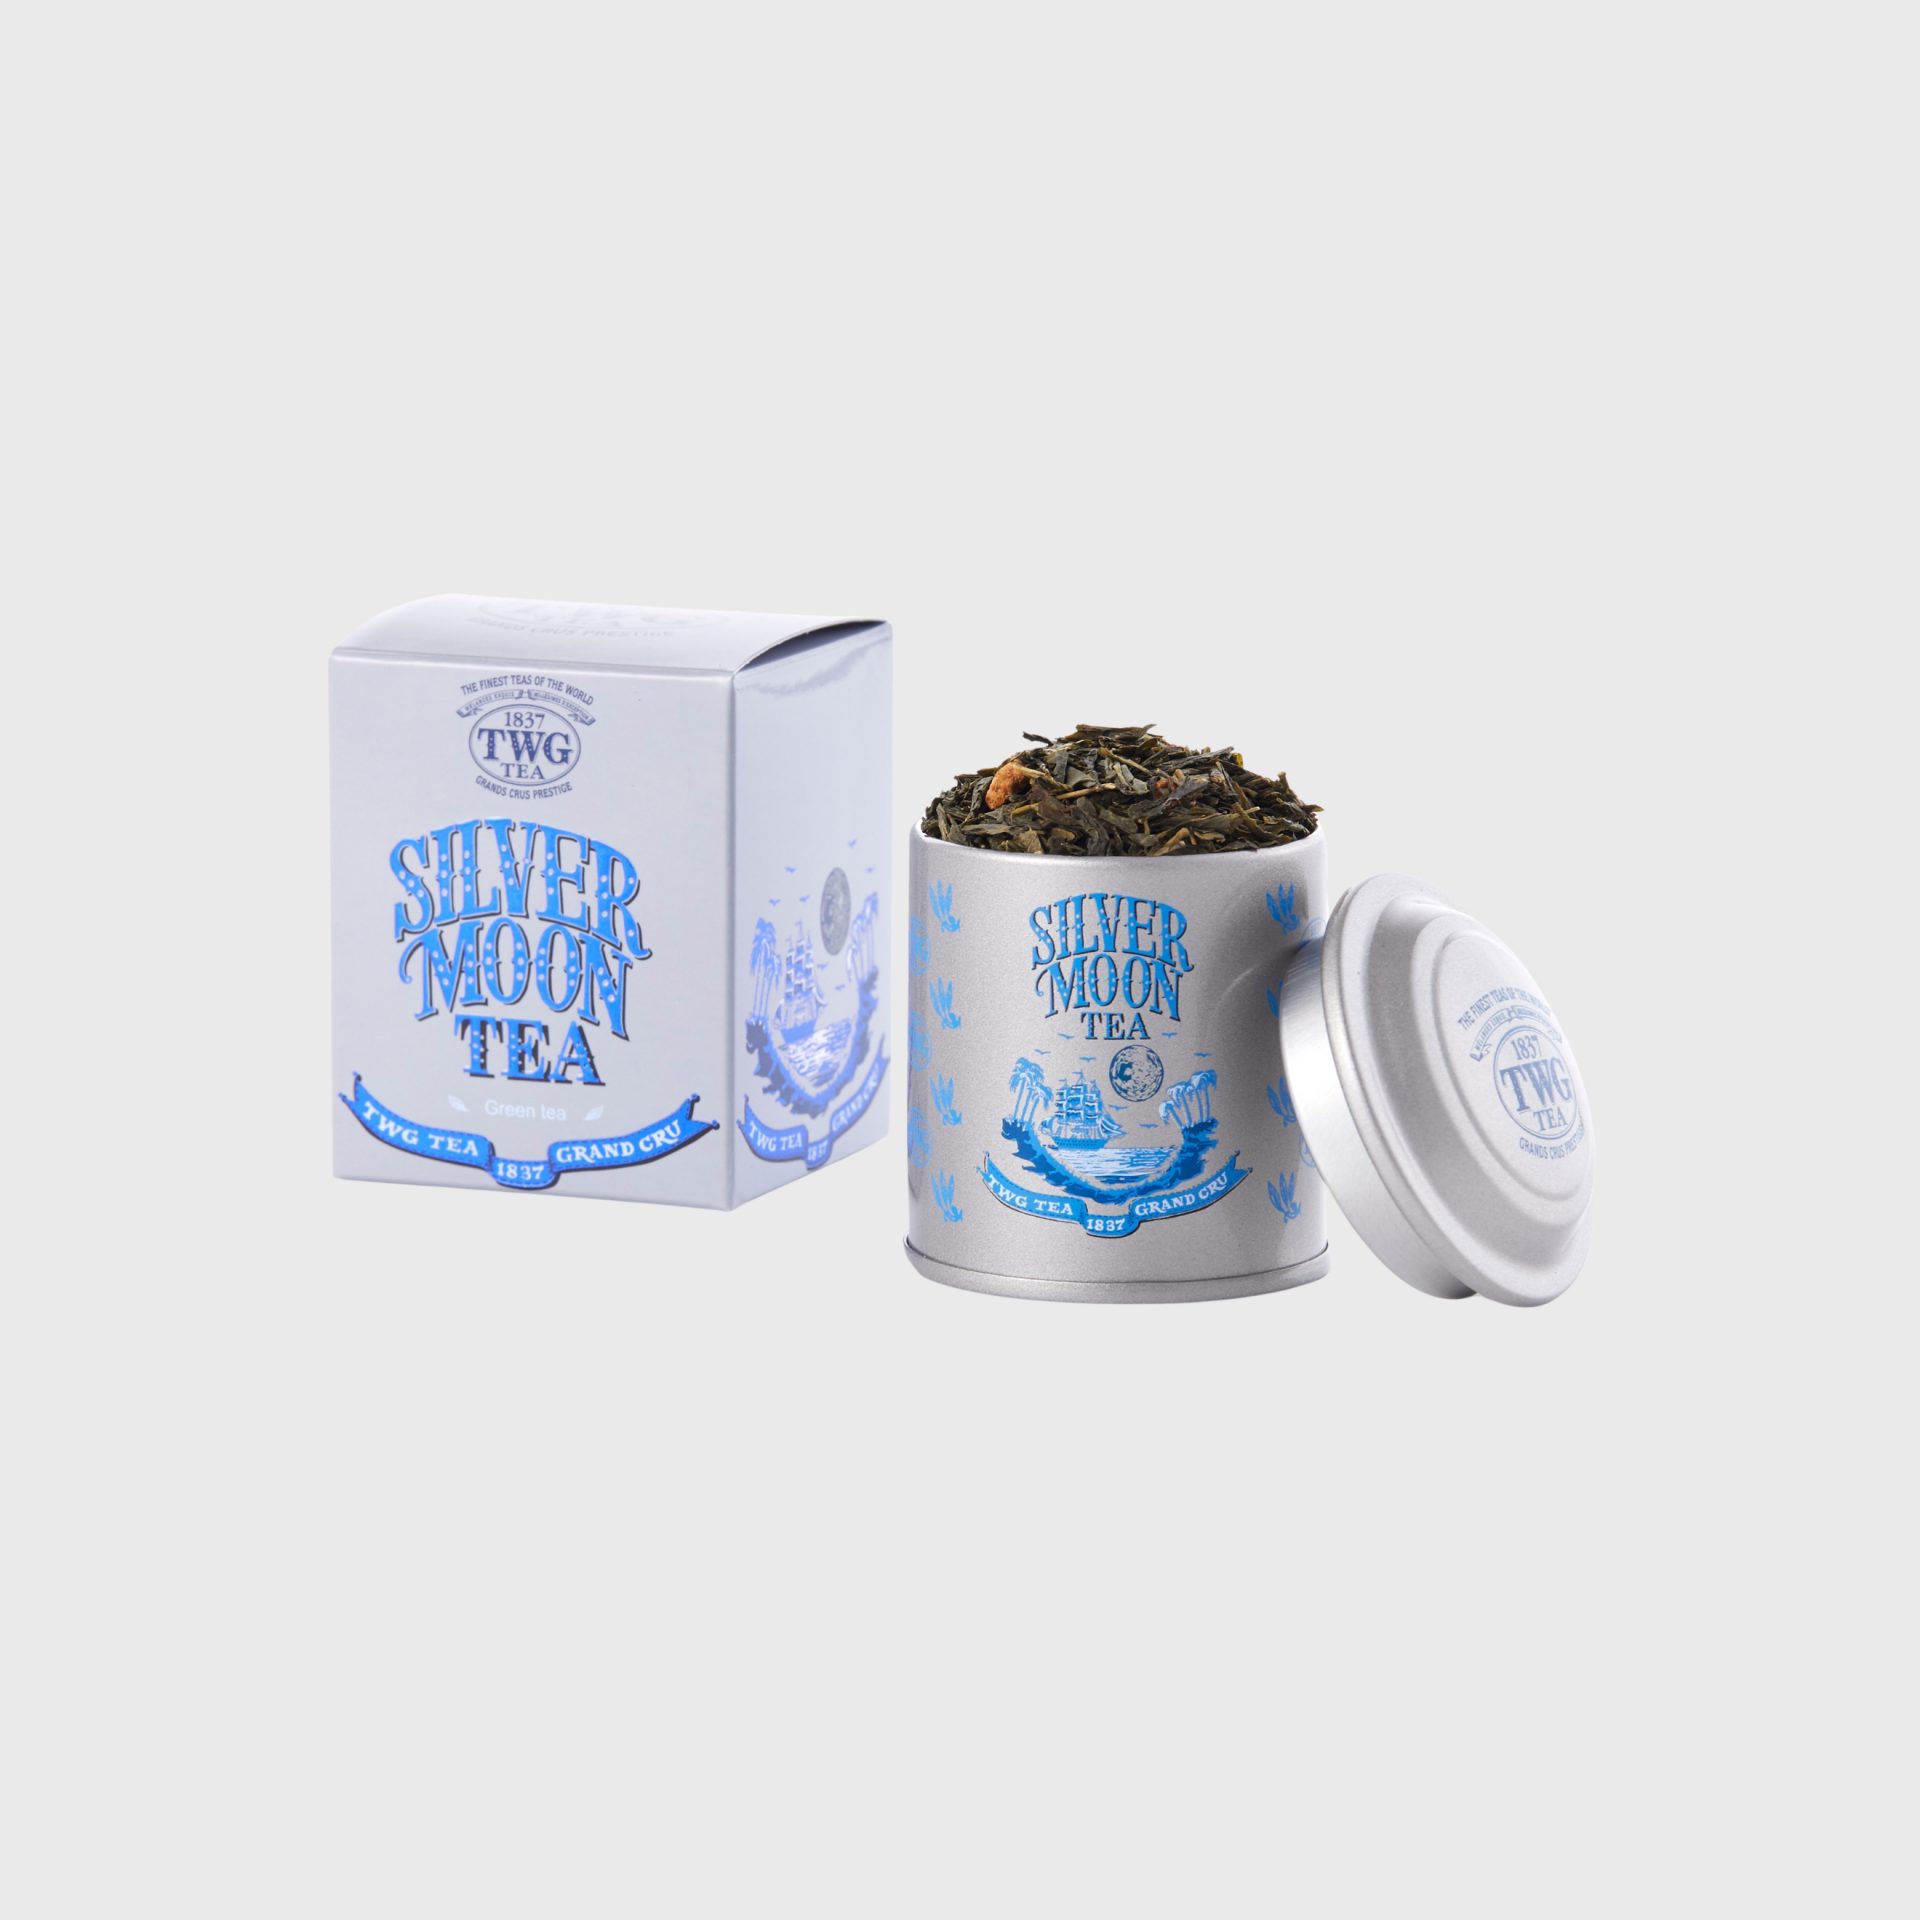 TWG tea corporate gifts singapore-silver moon tea